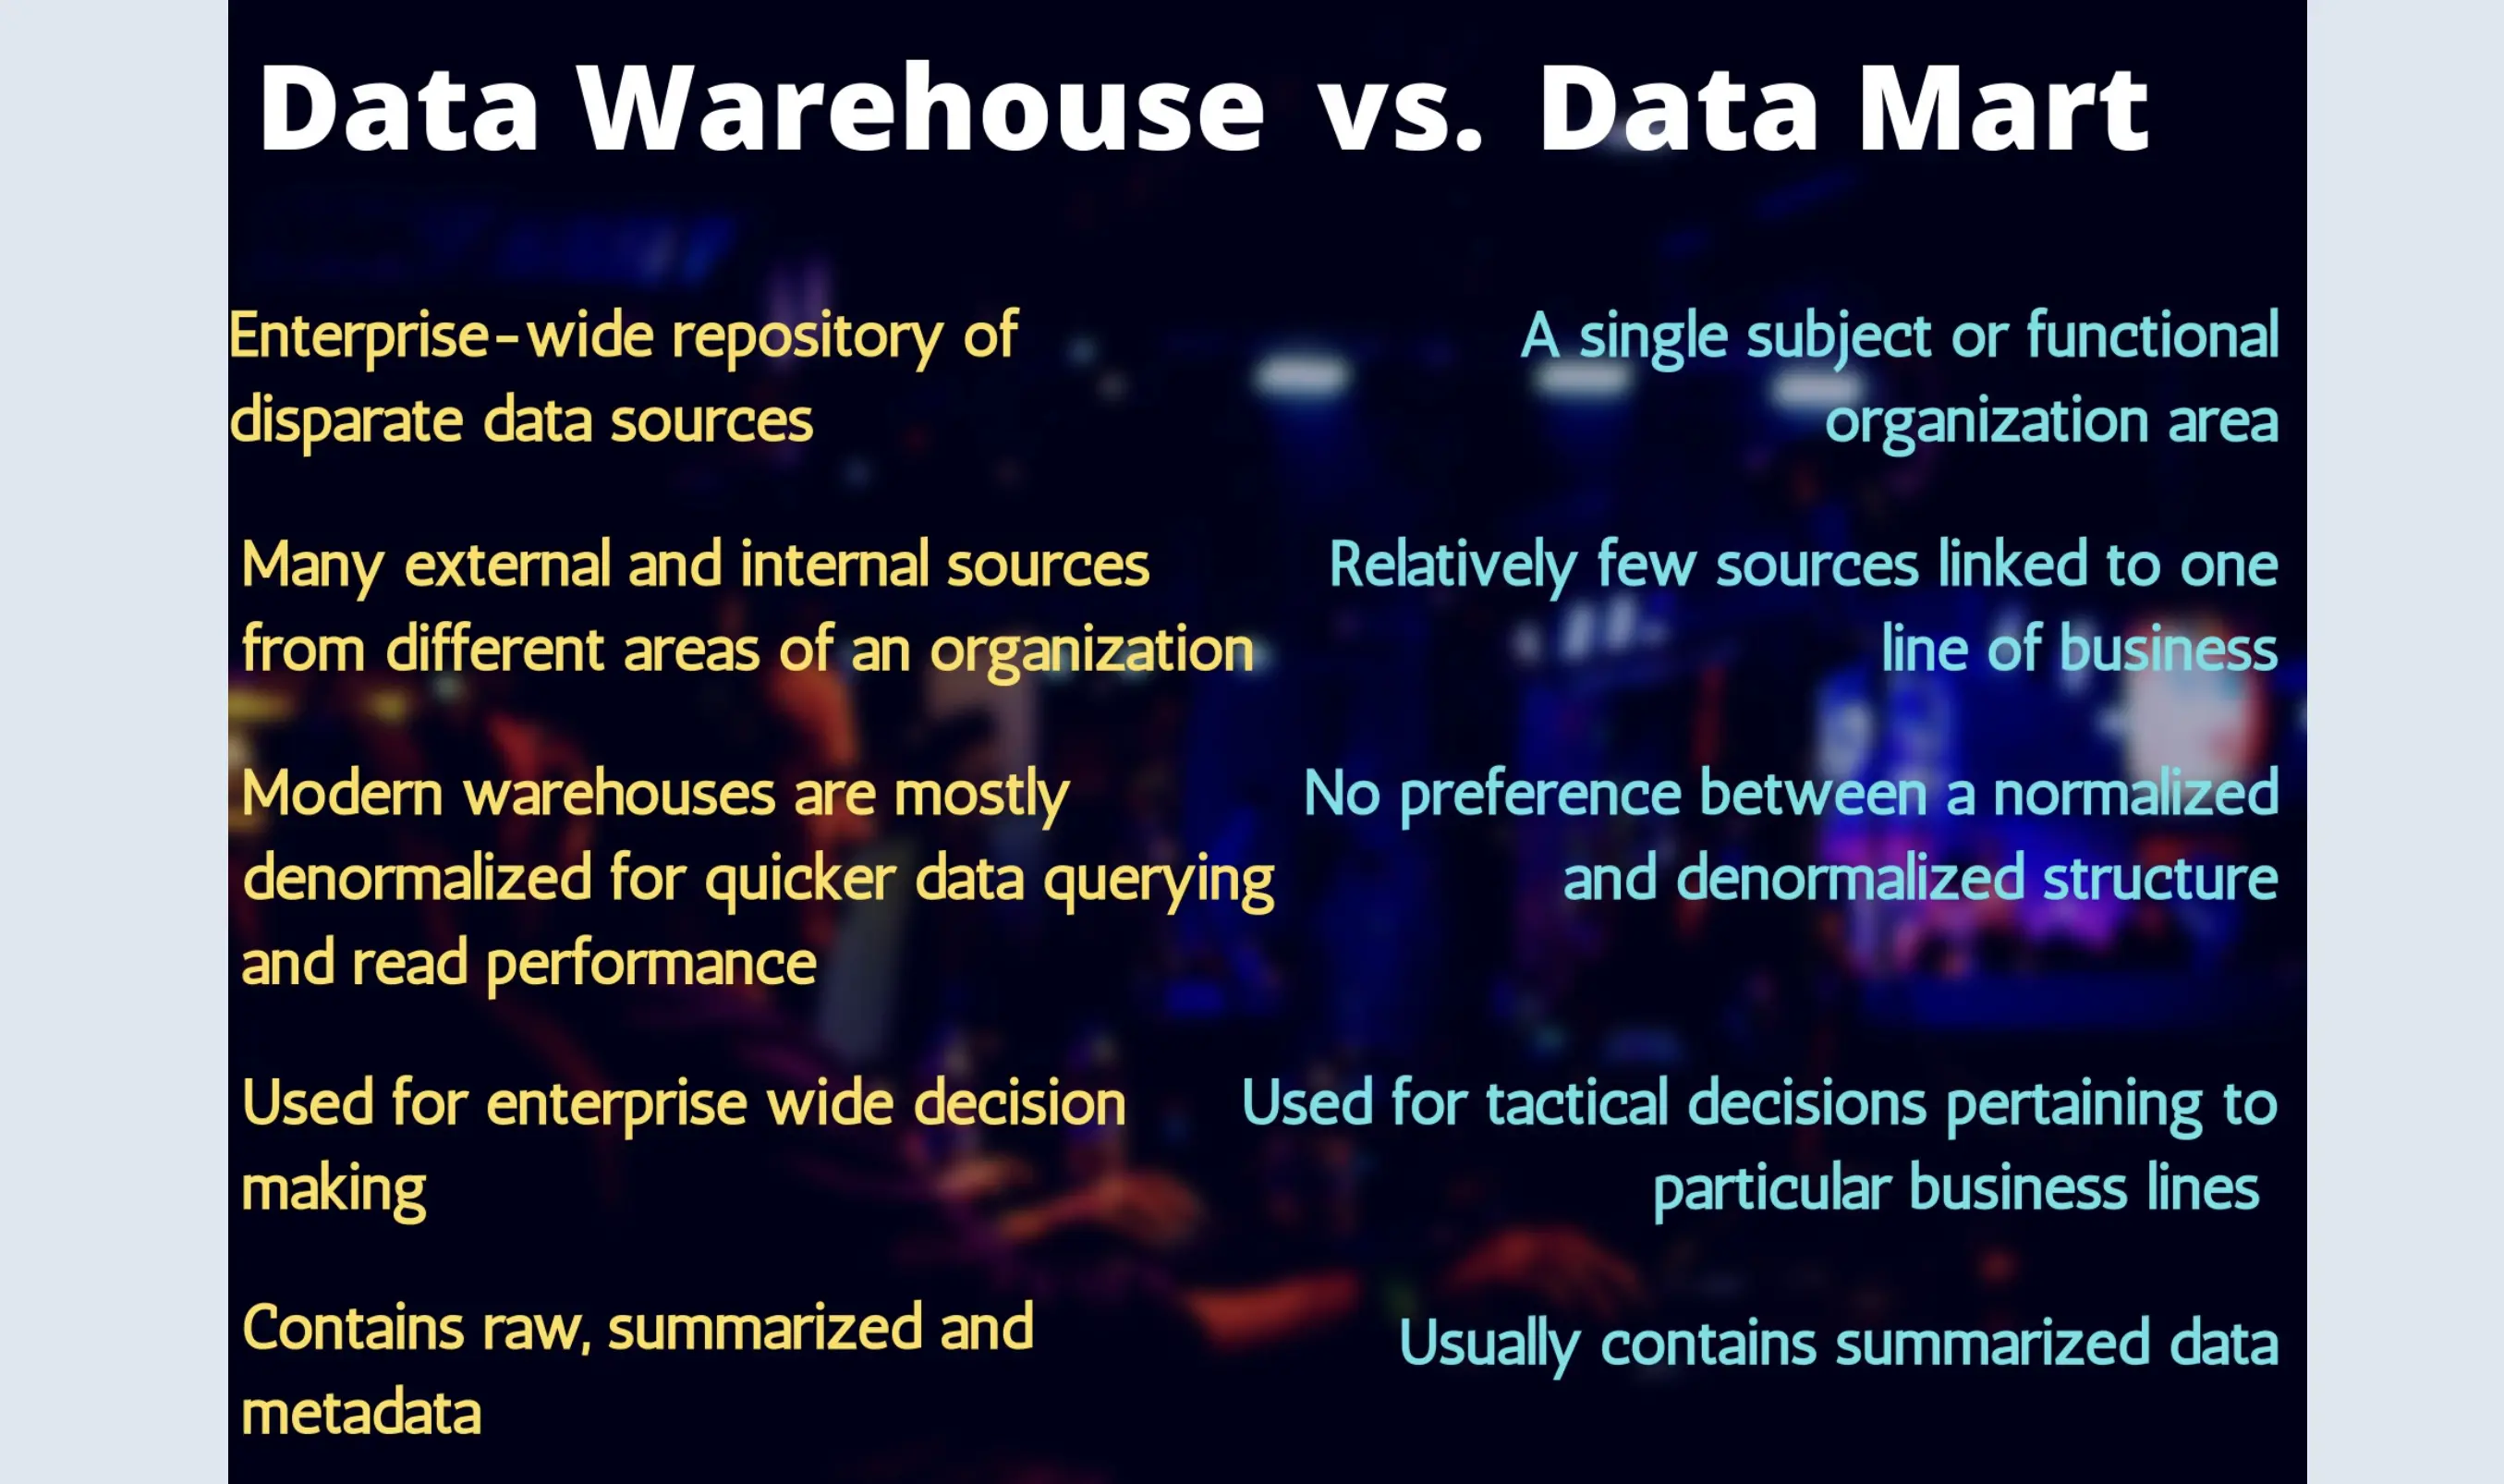 Data mart vs. data warehouse: The key differences.